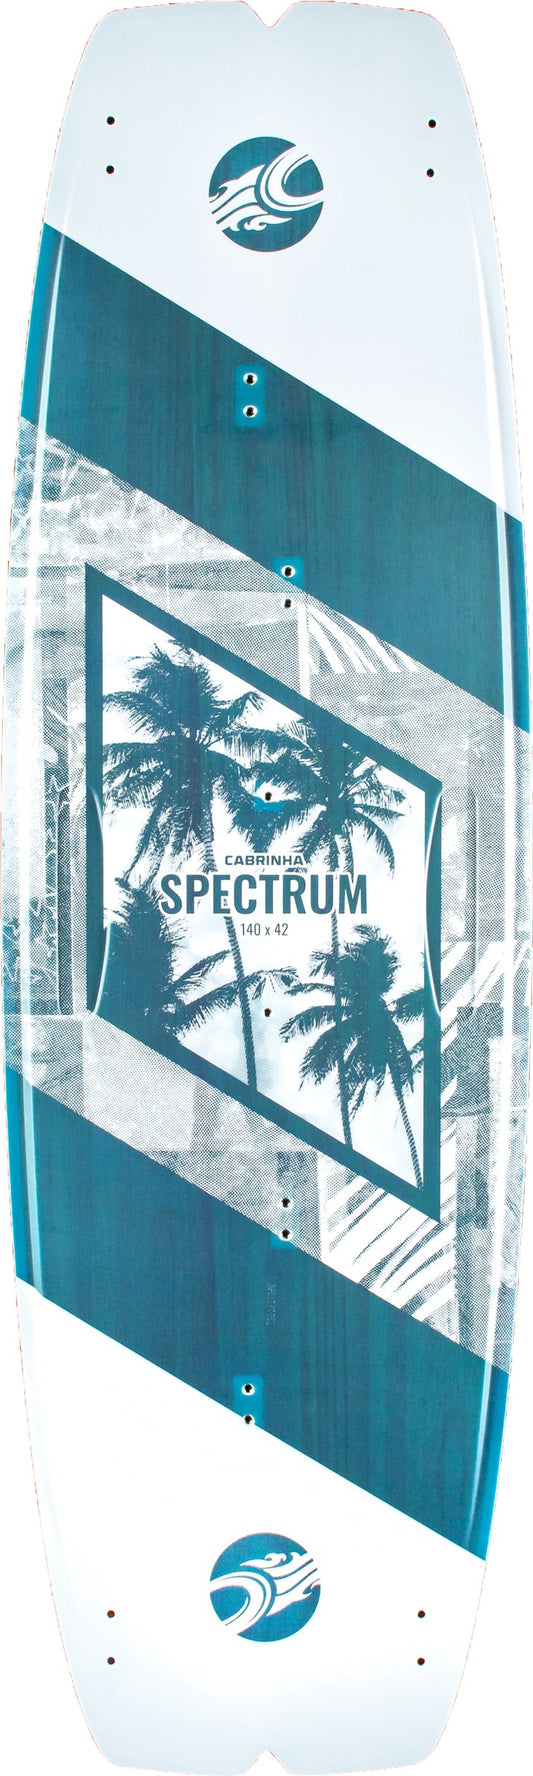 Cabrinha 02S Spectrum Board Only